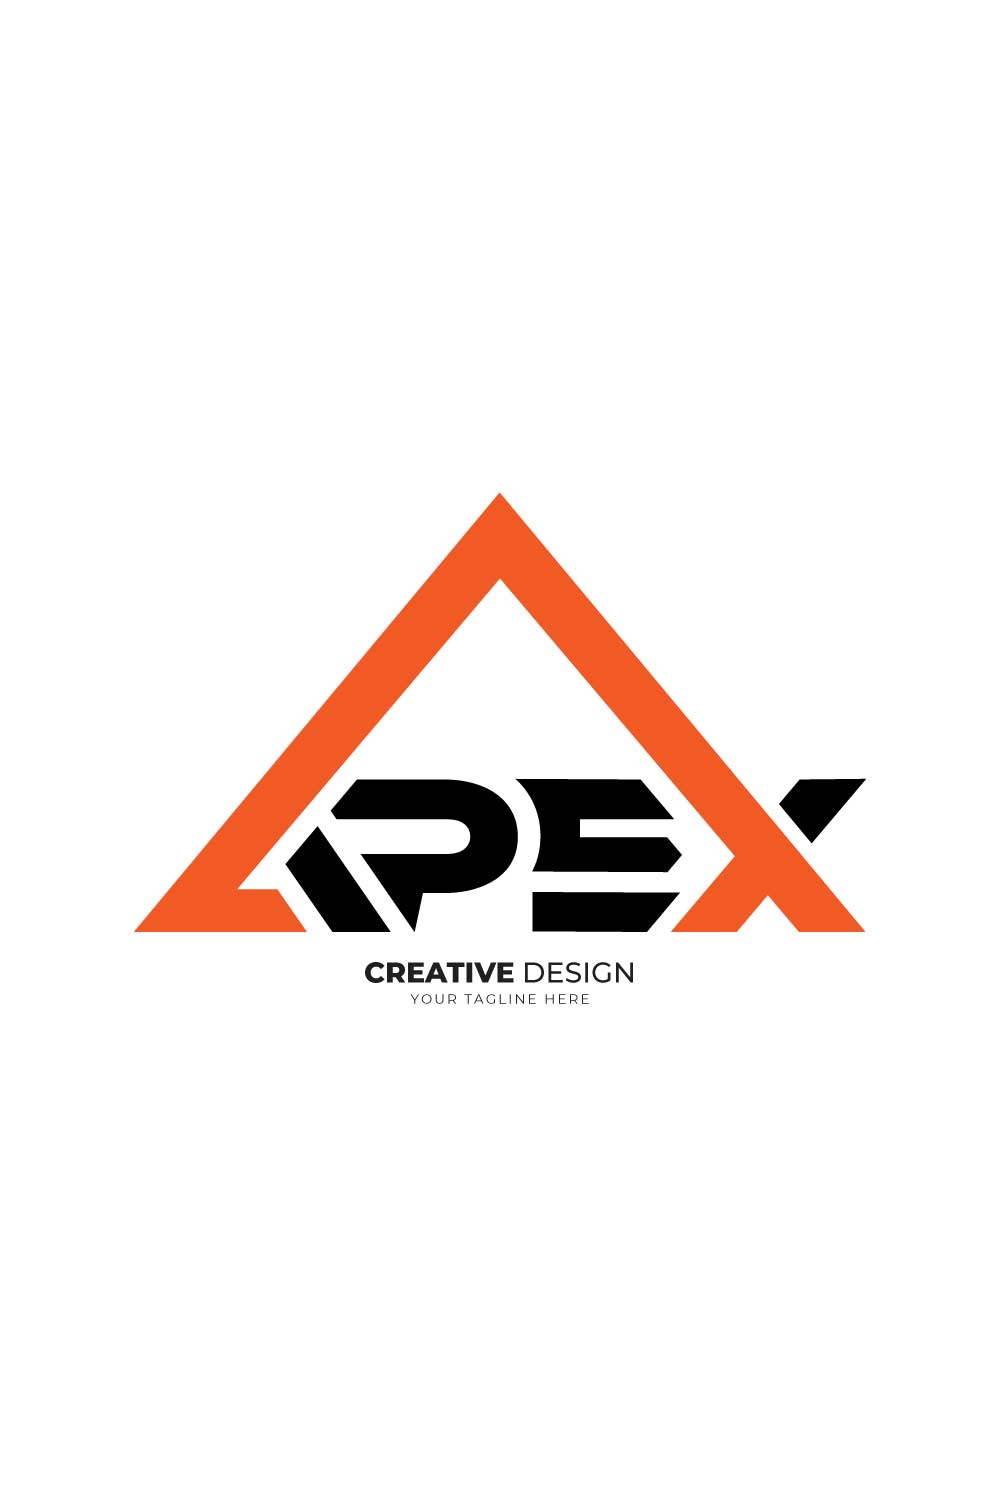 Apex triangle modern shape mountain branding unique logo pinterest preview image.